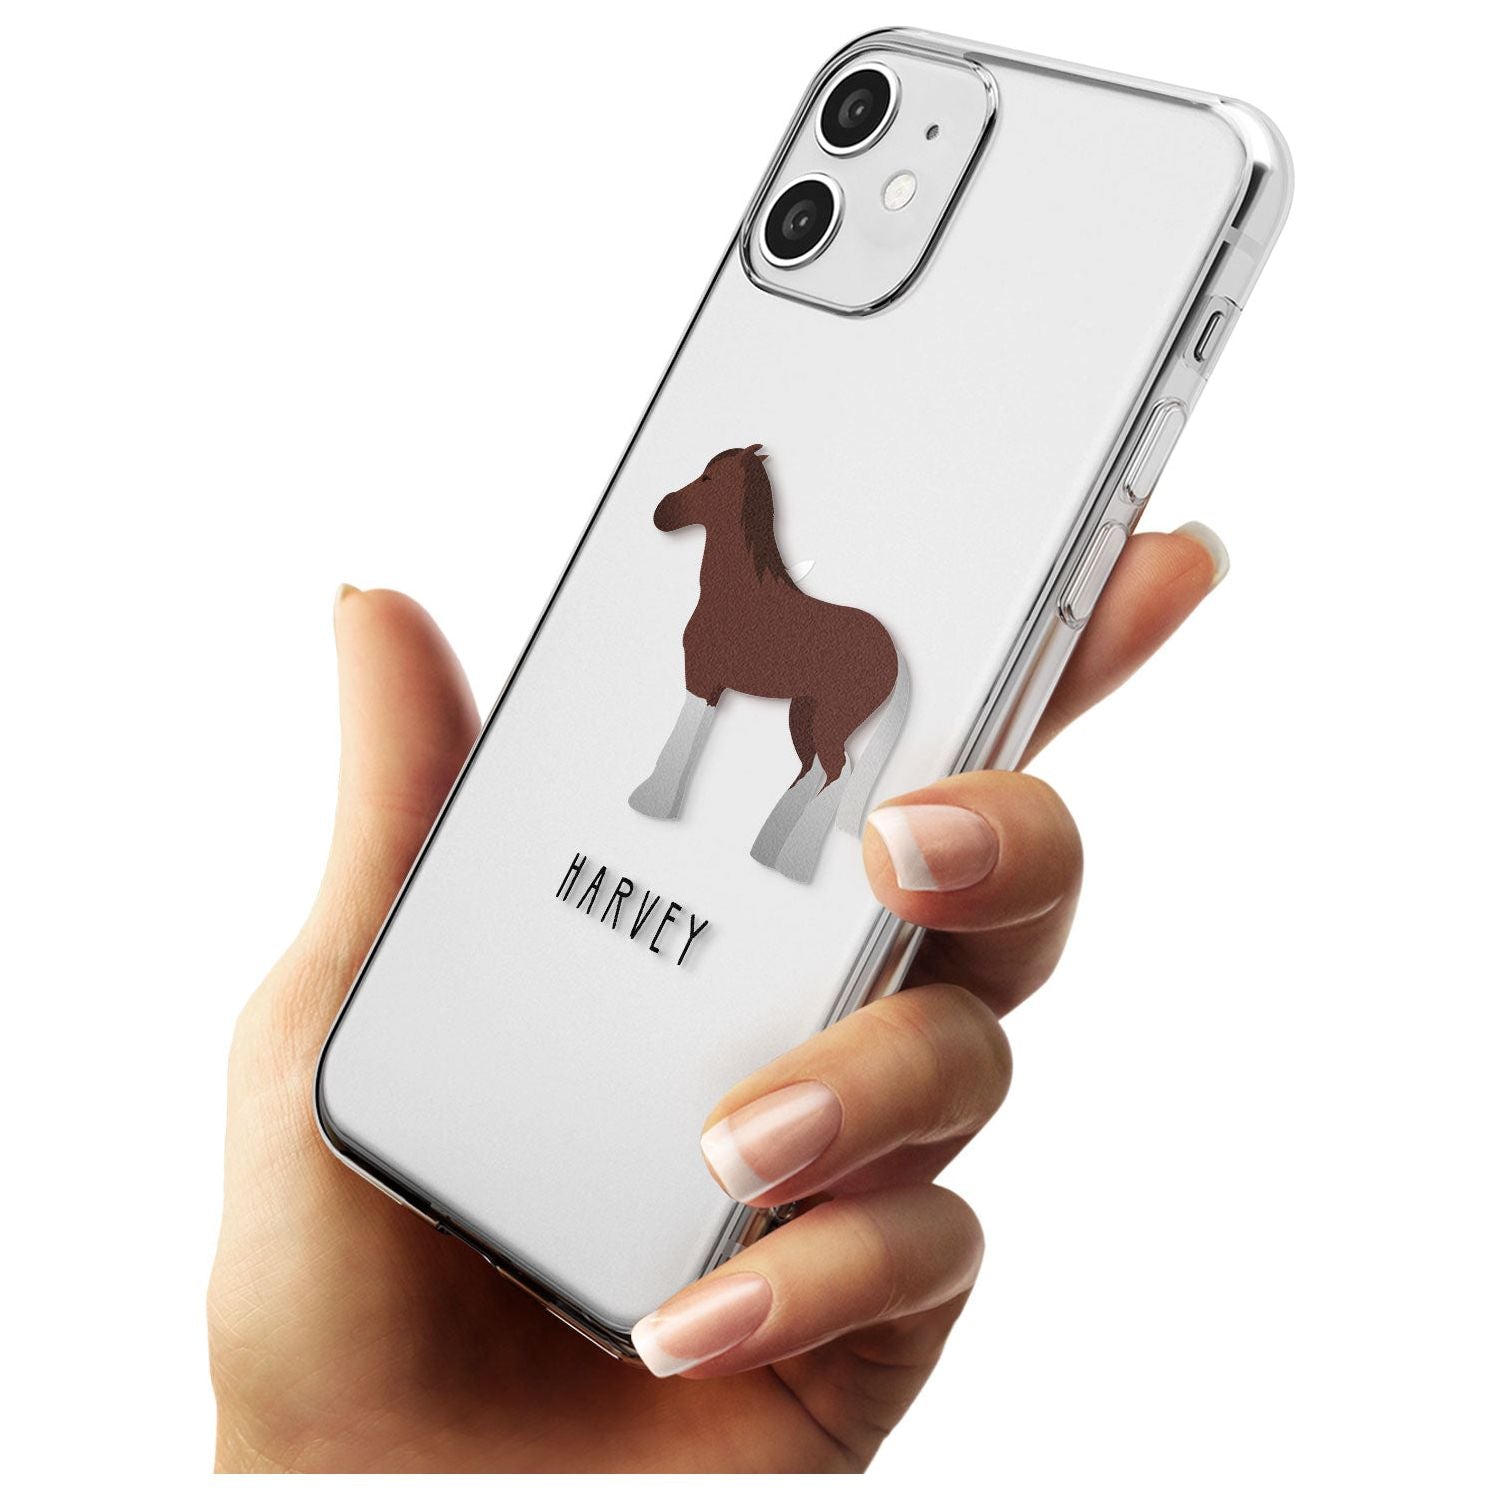 Personalised Brown Horse Slim TPU Phone Case for iPhone 11